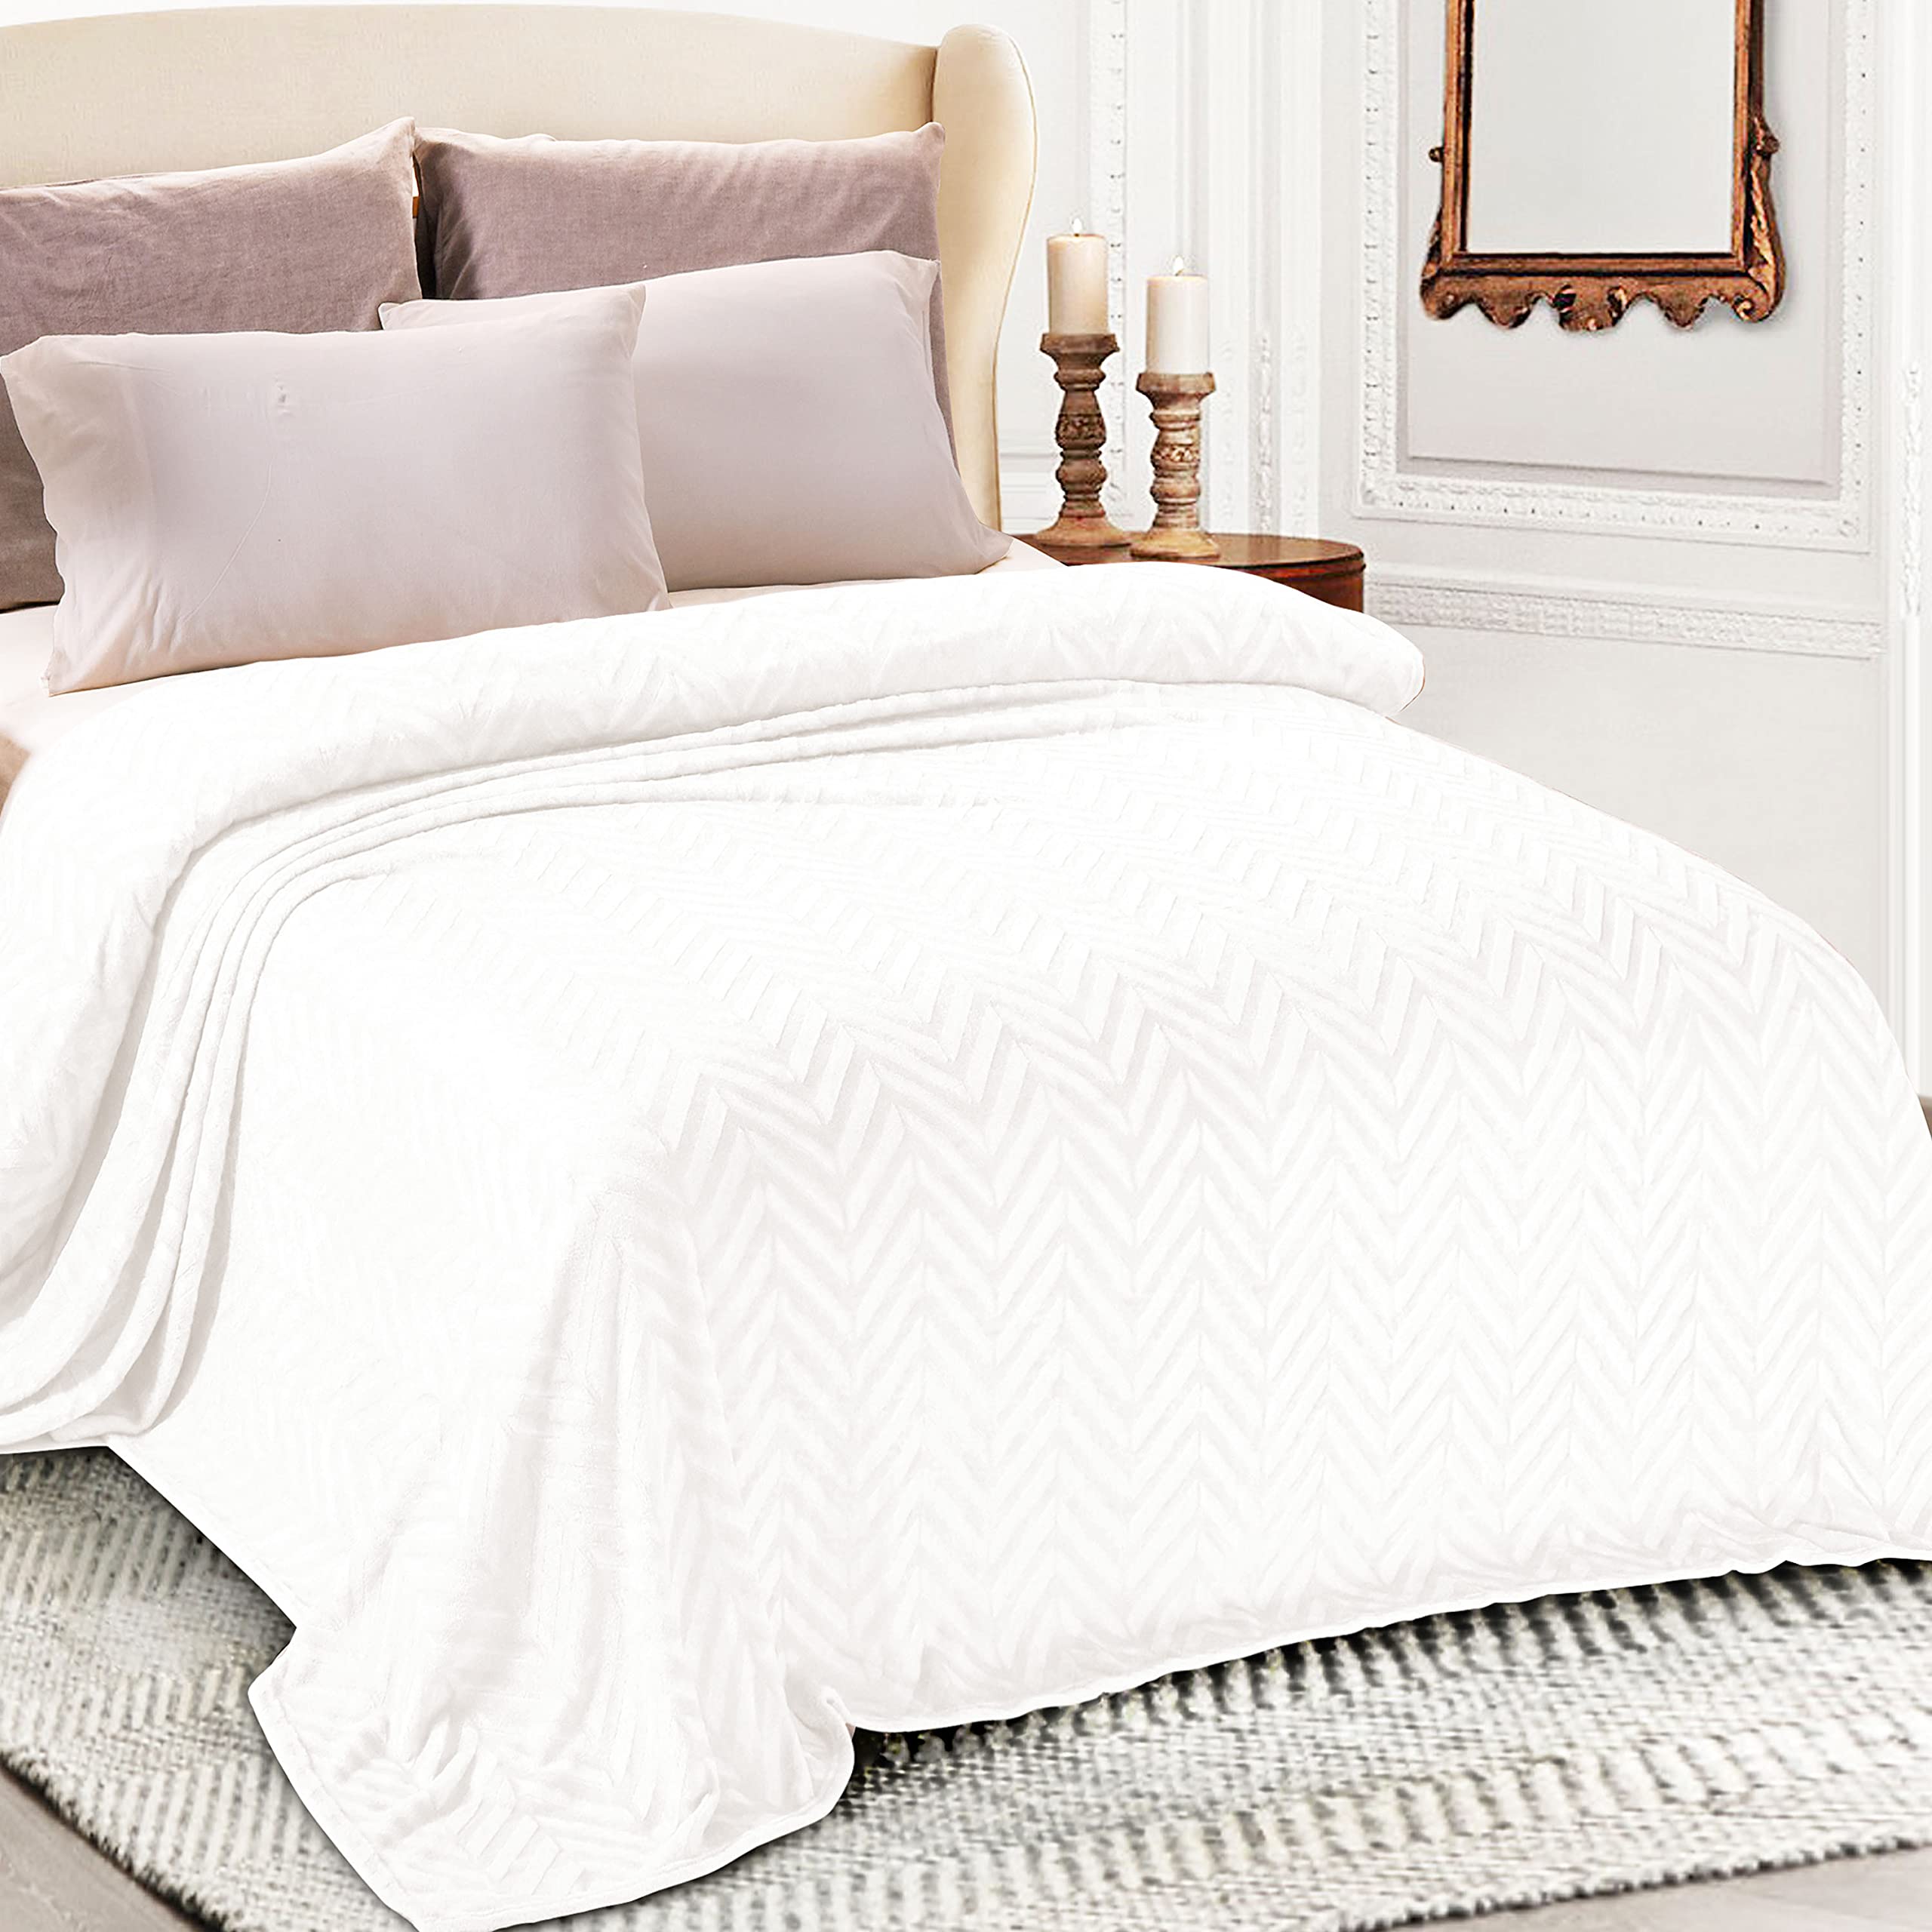 Whale Flotilla Flannel Fleece Twin Size Bed Blanket, Soft Velvet Lightweight Bedspread Plush Fluffy Coverlet Chevron Design Deco